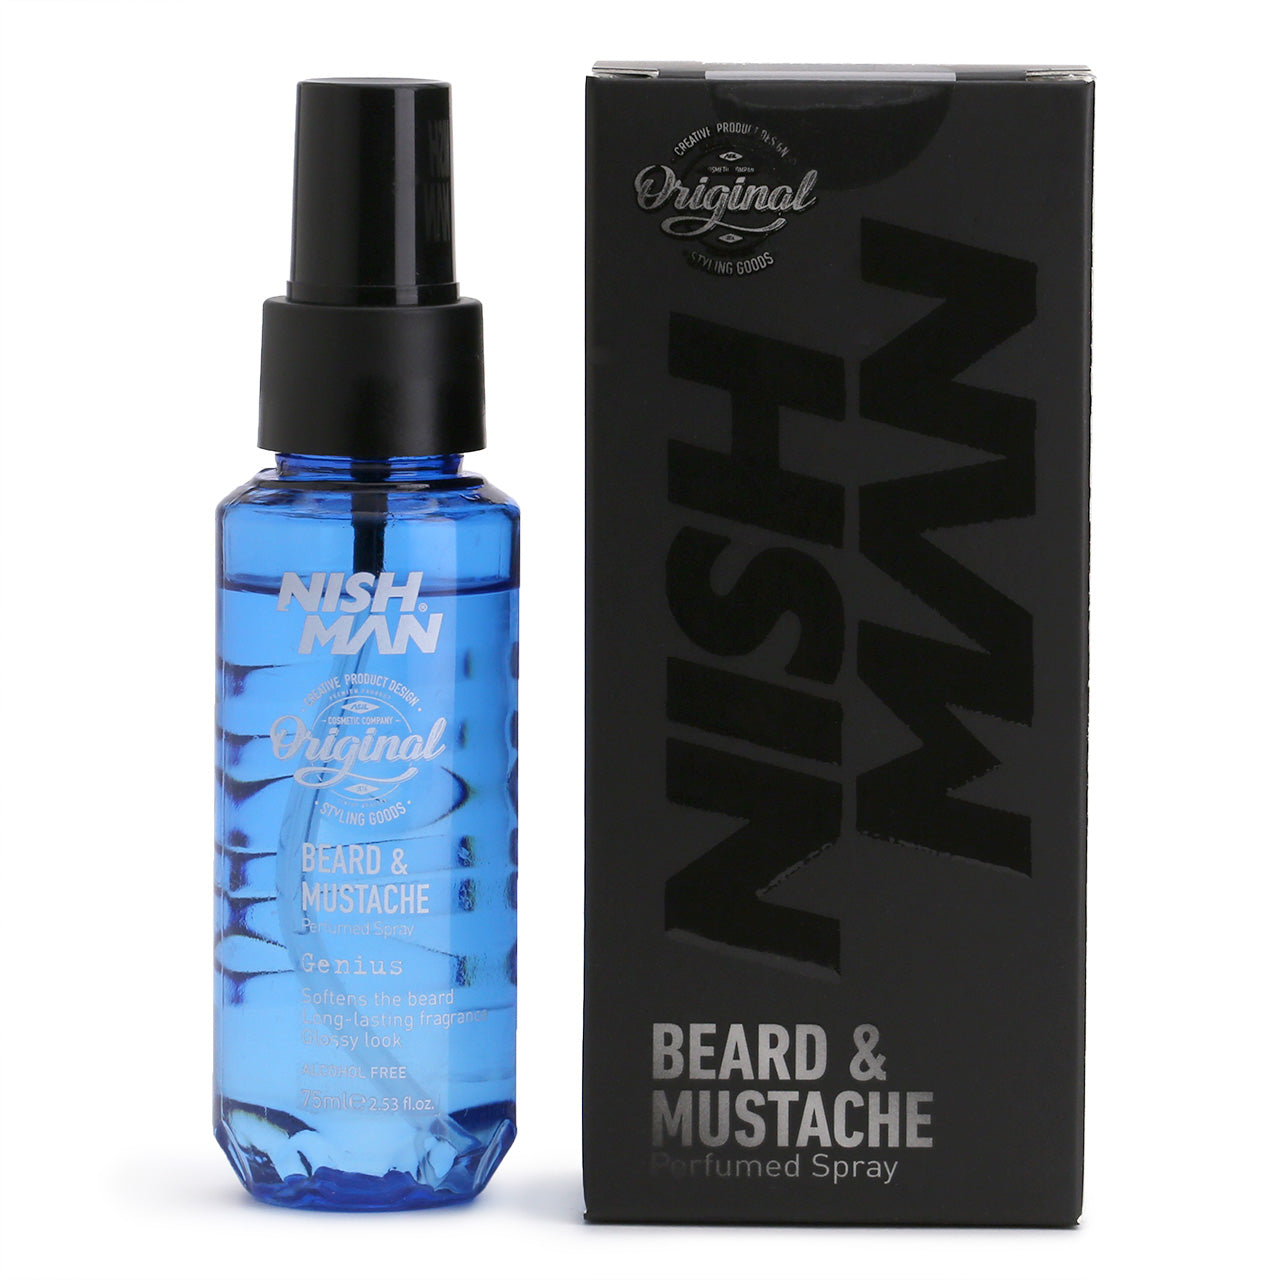 Genius-scent beard Perfume by Nishman, spray bottle and black carton